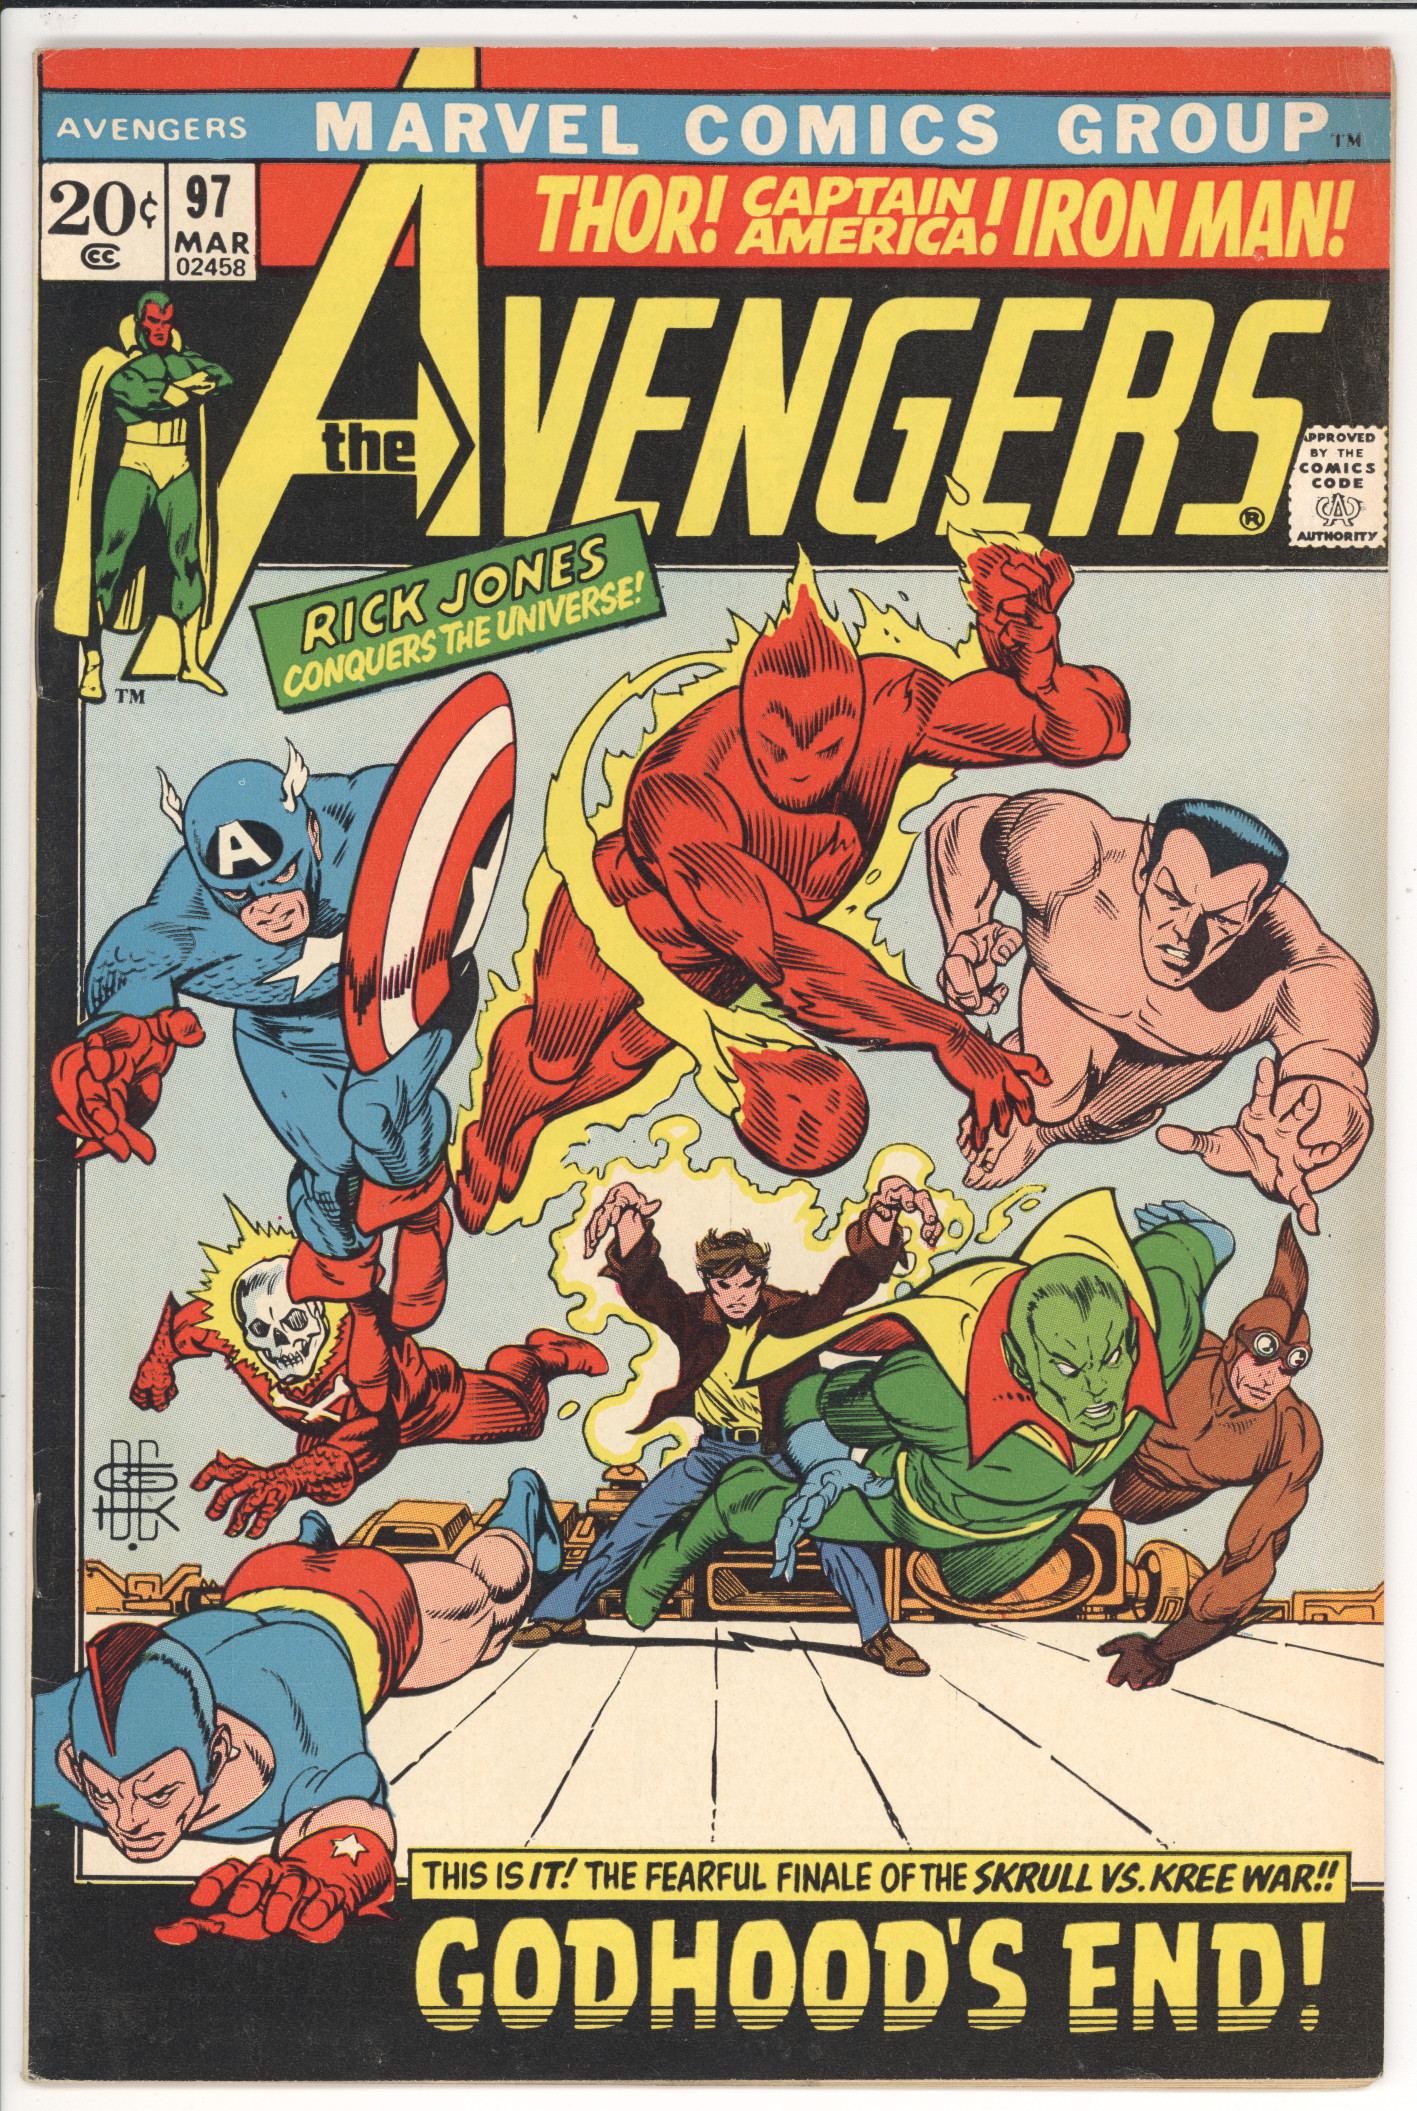 Avengers #97 front